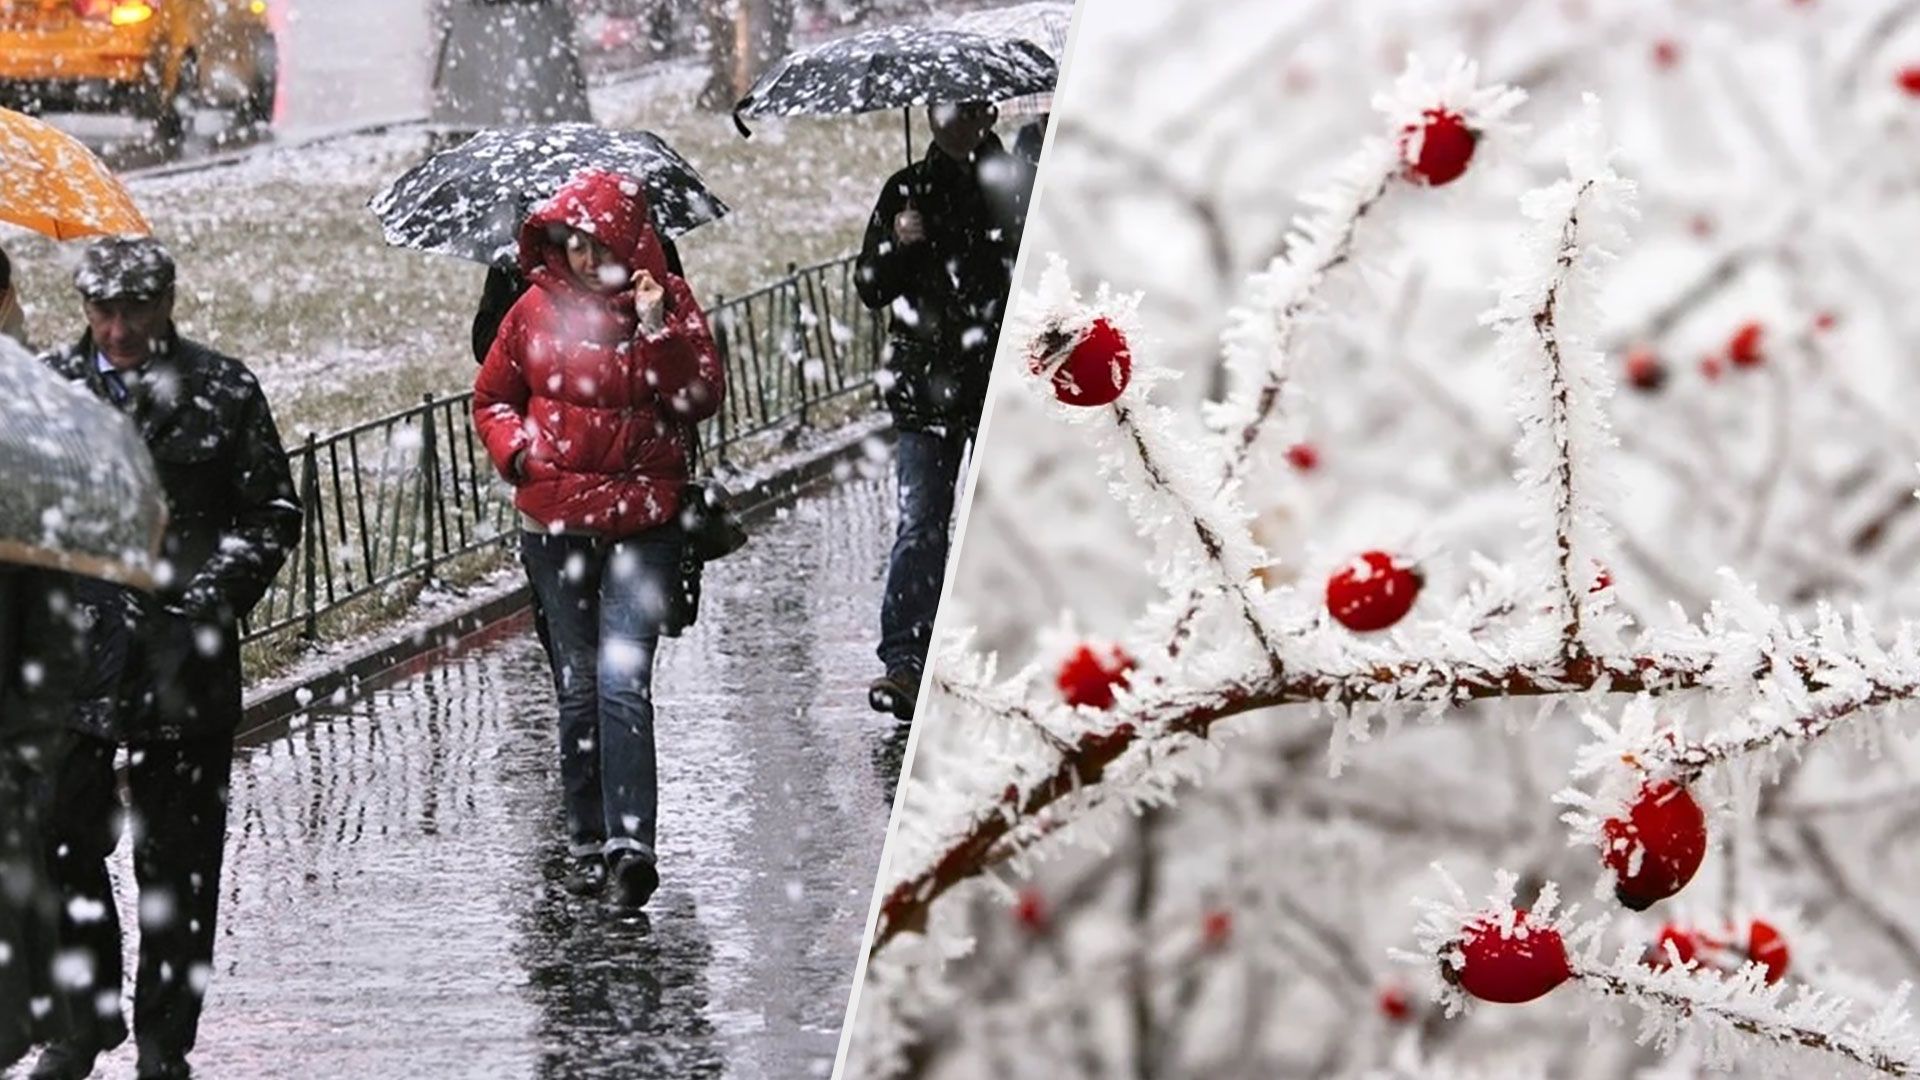 Погода завтра - на западе Украины будут дожди и мокрый снег - прогноз погоды 9 января - 24 Канал